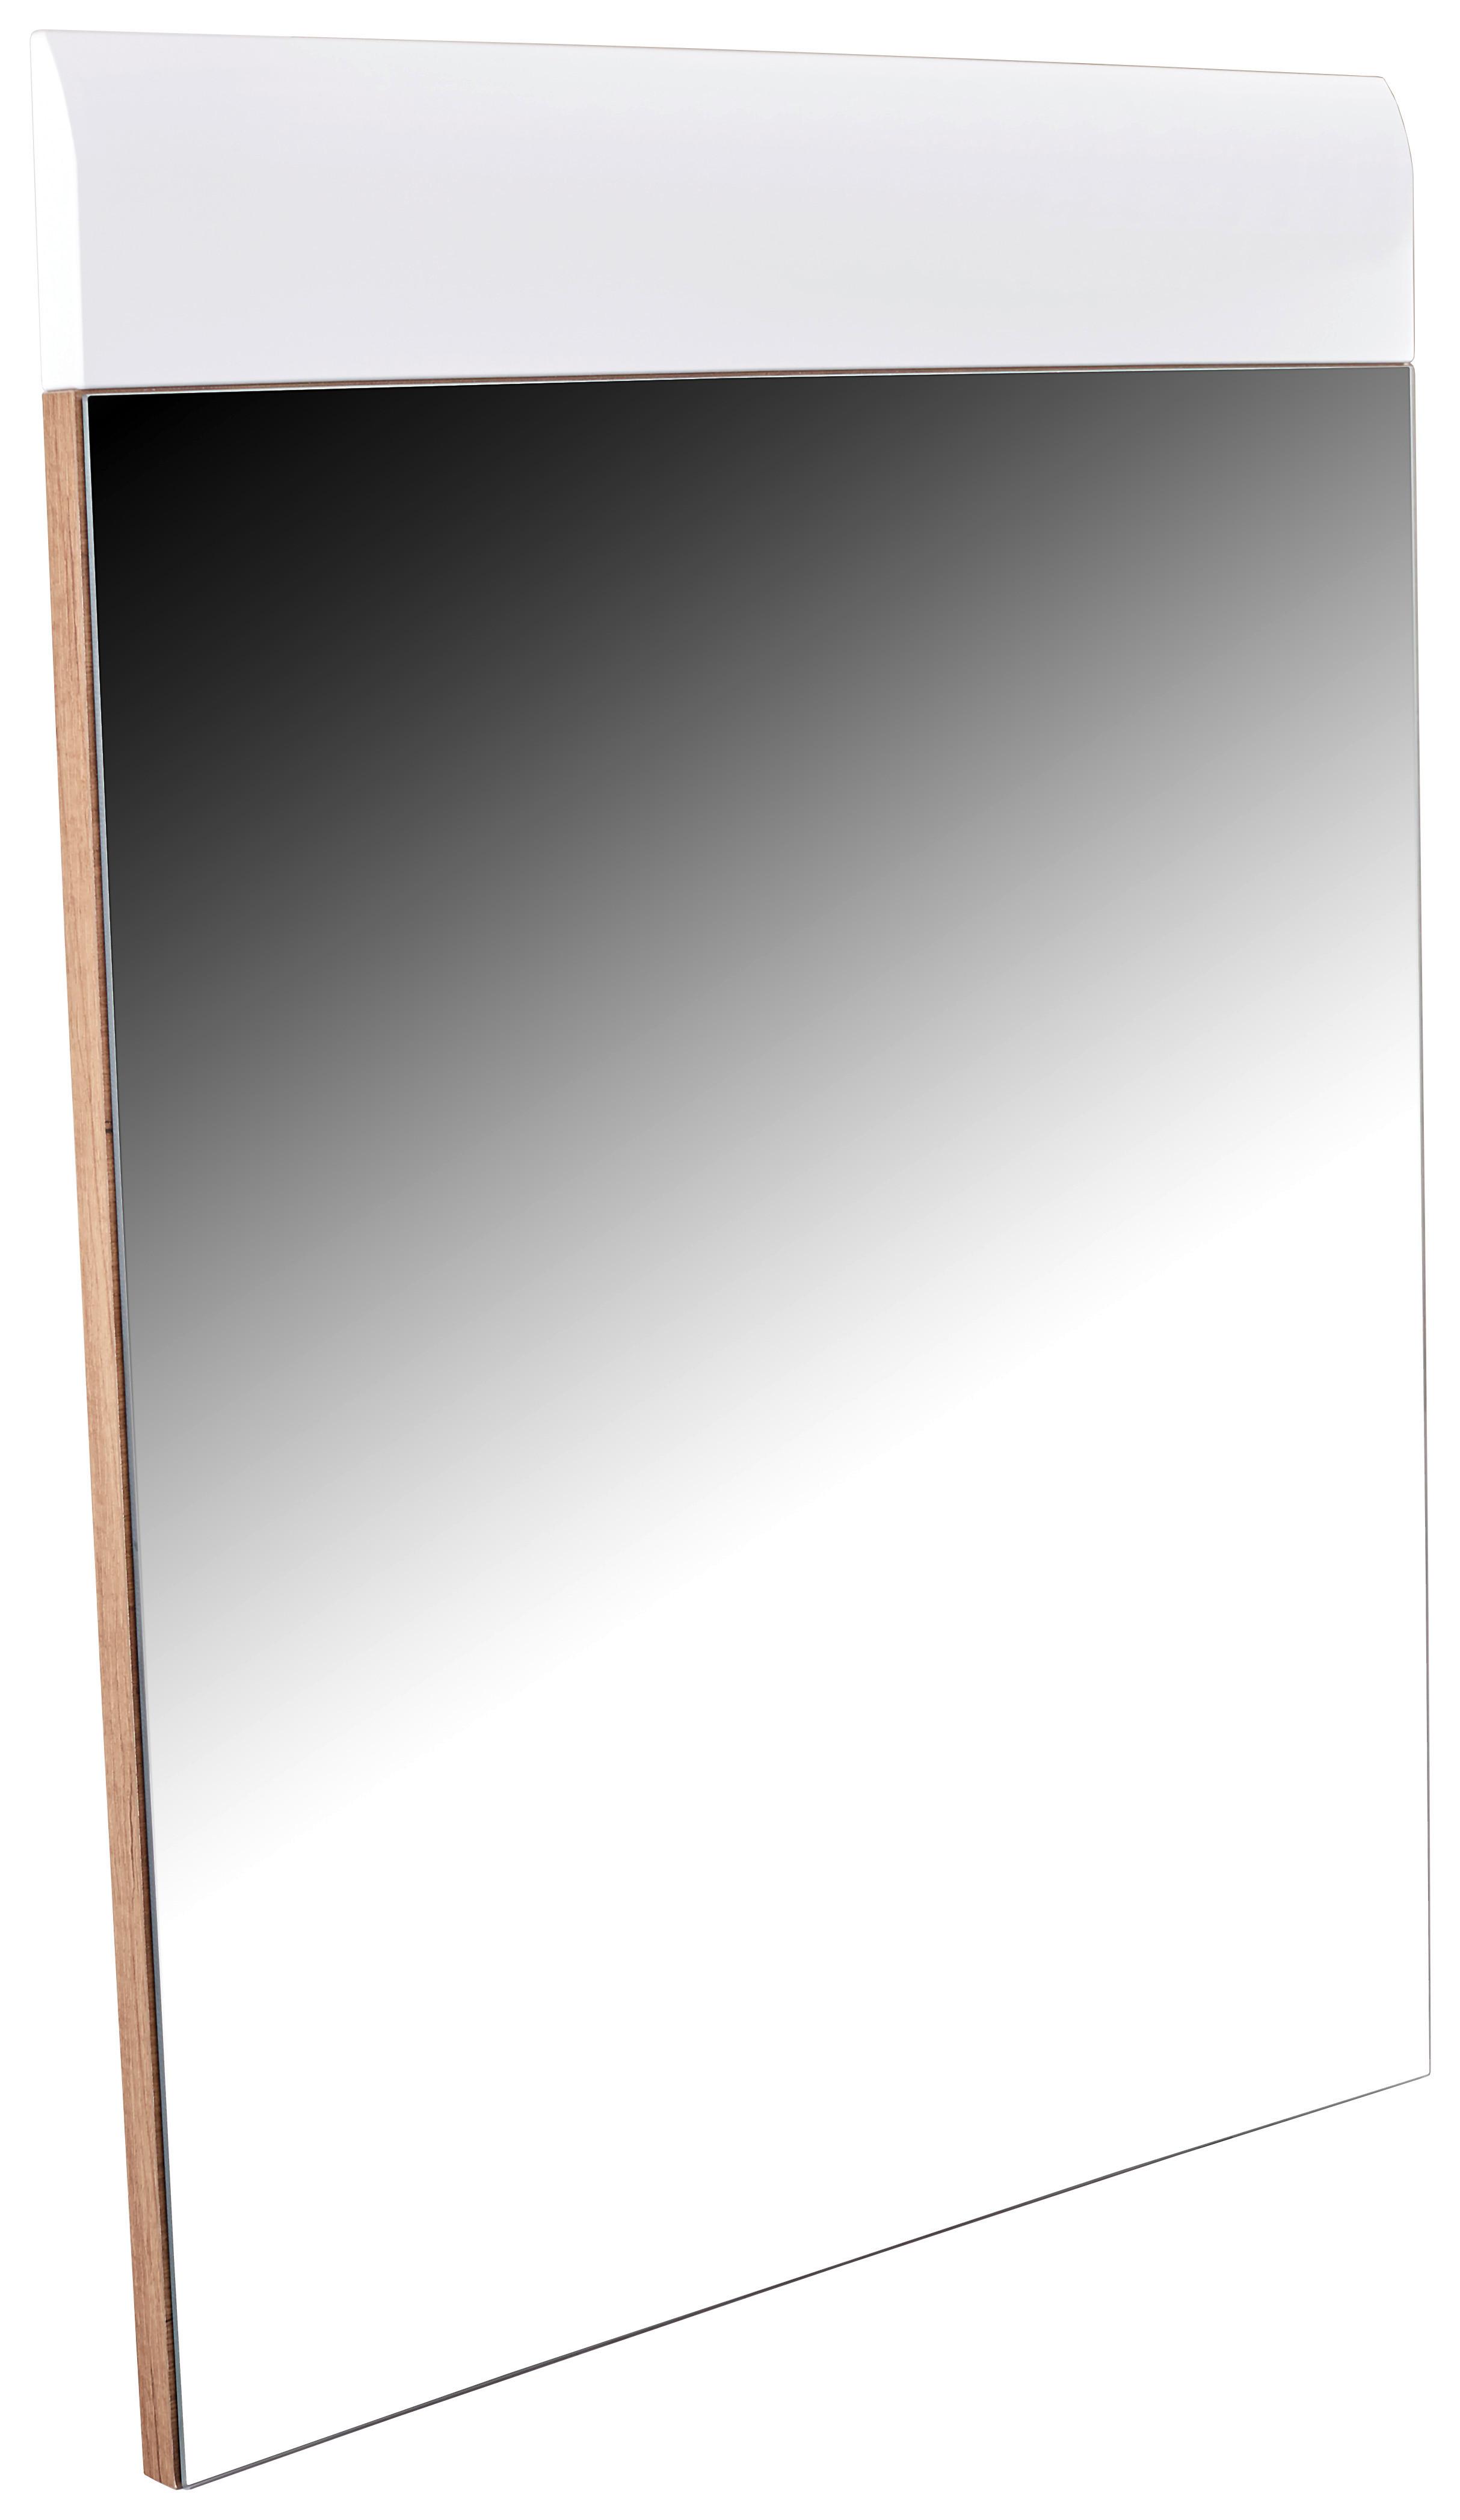 Ogledalo Avensis - barve hrasta/bela, Moderno, leseni material (85/87/2cm) - Modern Living